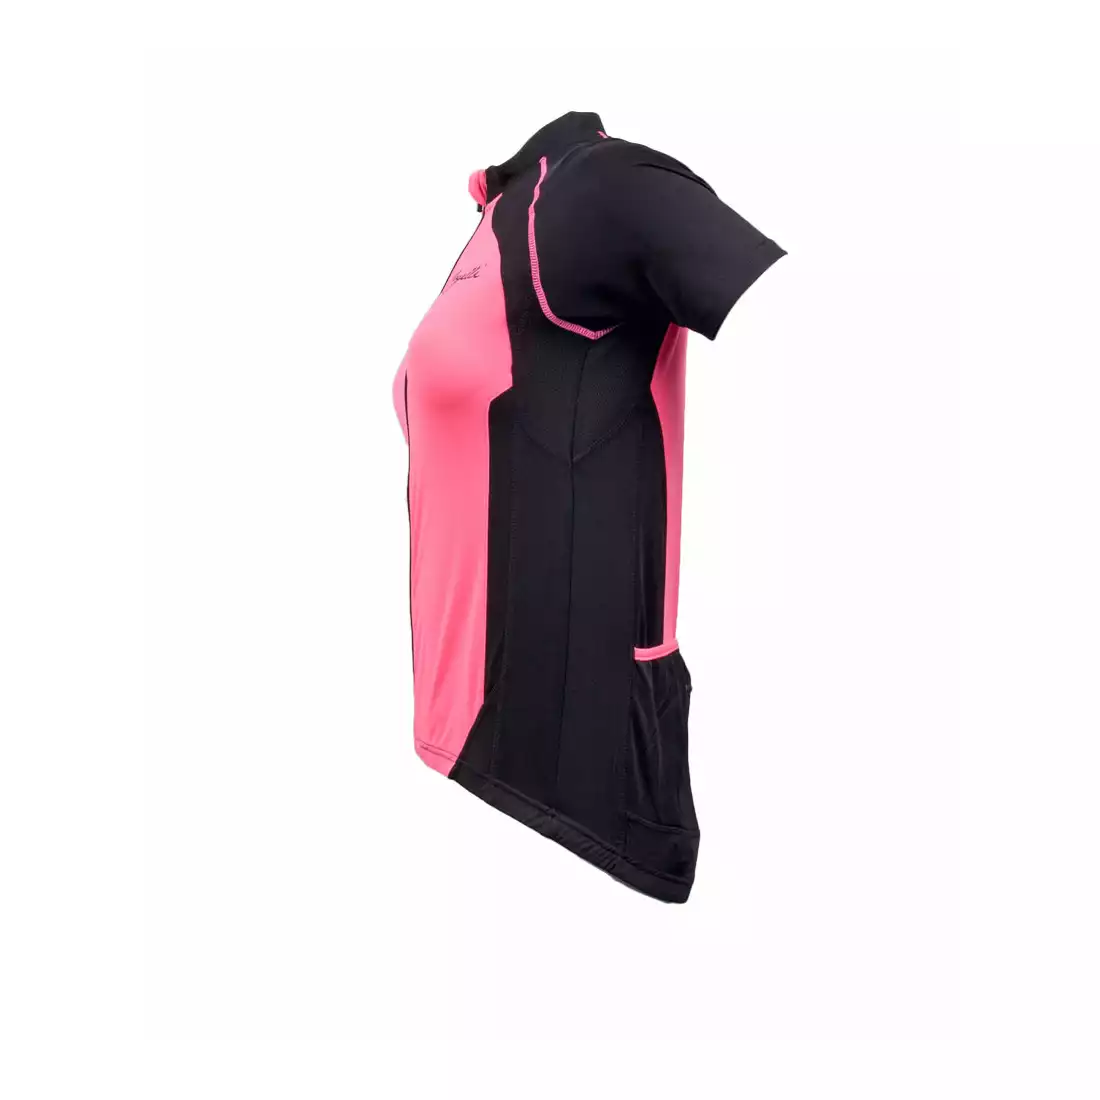 ROGELLI BICE - damska koszulka rowerowa, czarno-różowa